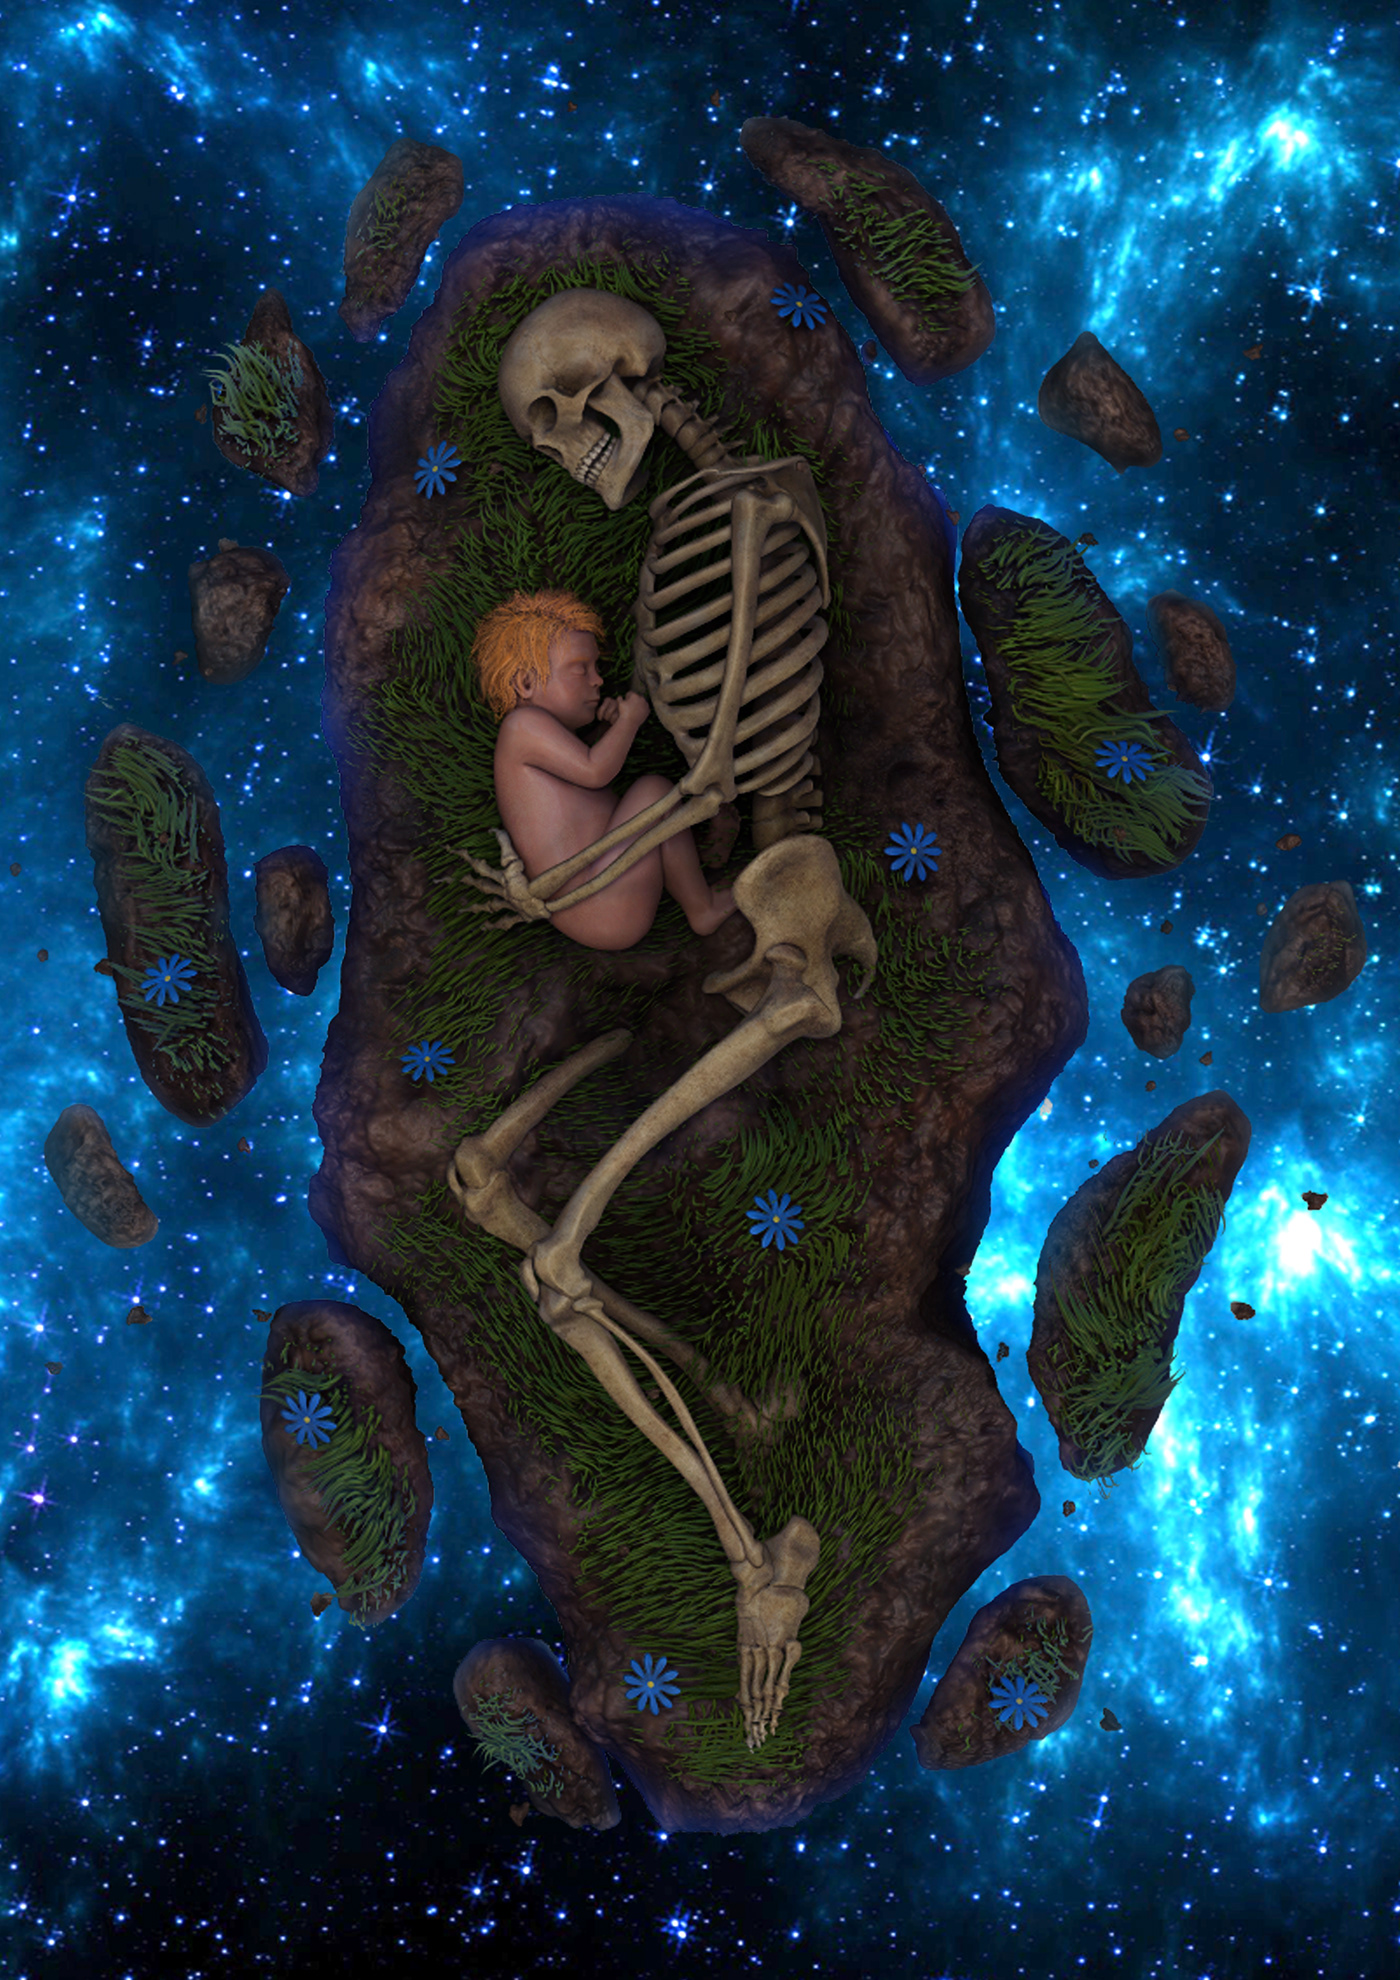 Zbrush photoshop book cover skeleton skull baby nebula Space  Rui Caria